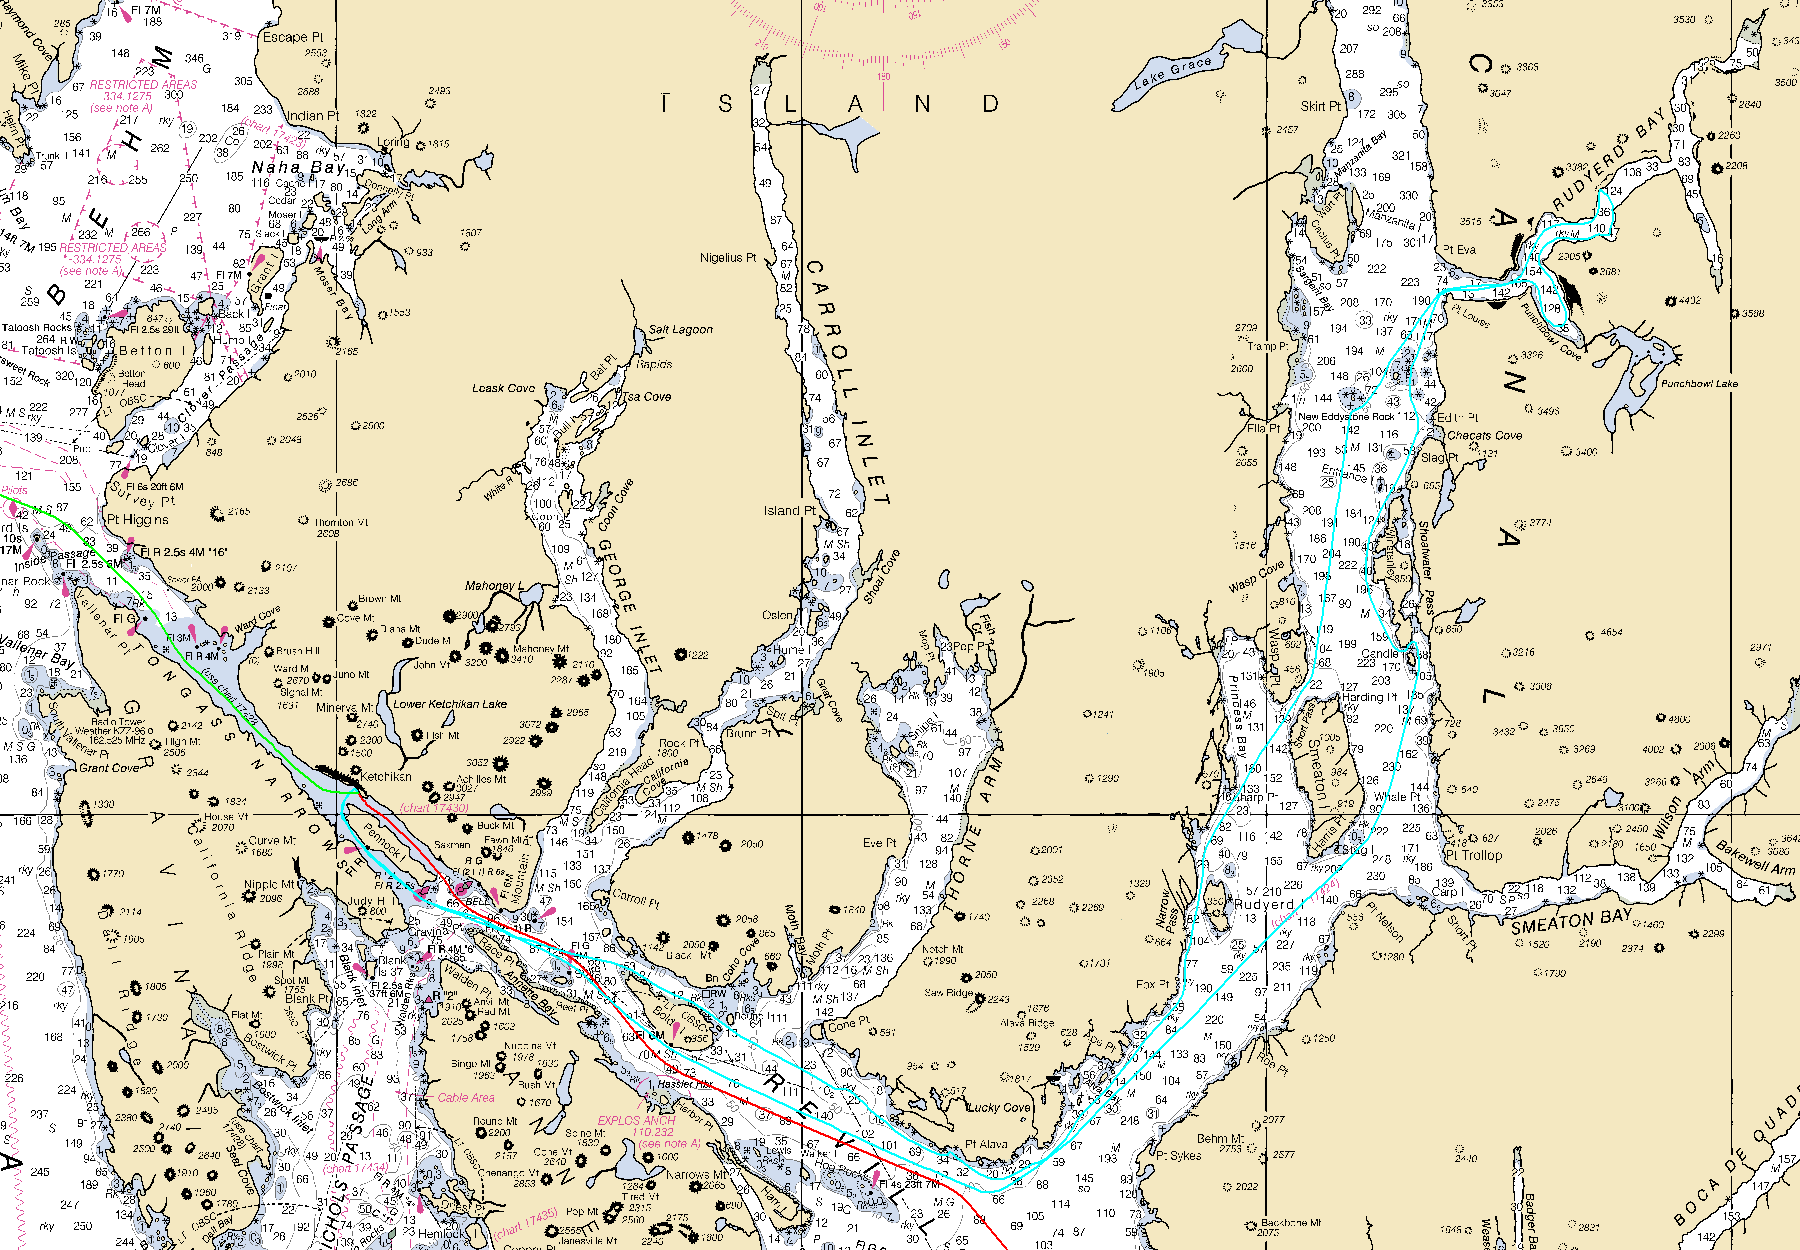 Misty Fjords Navigational Map